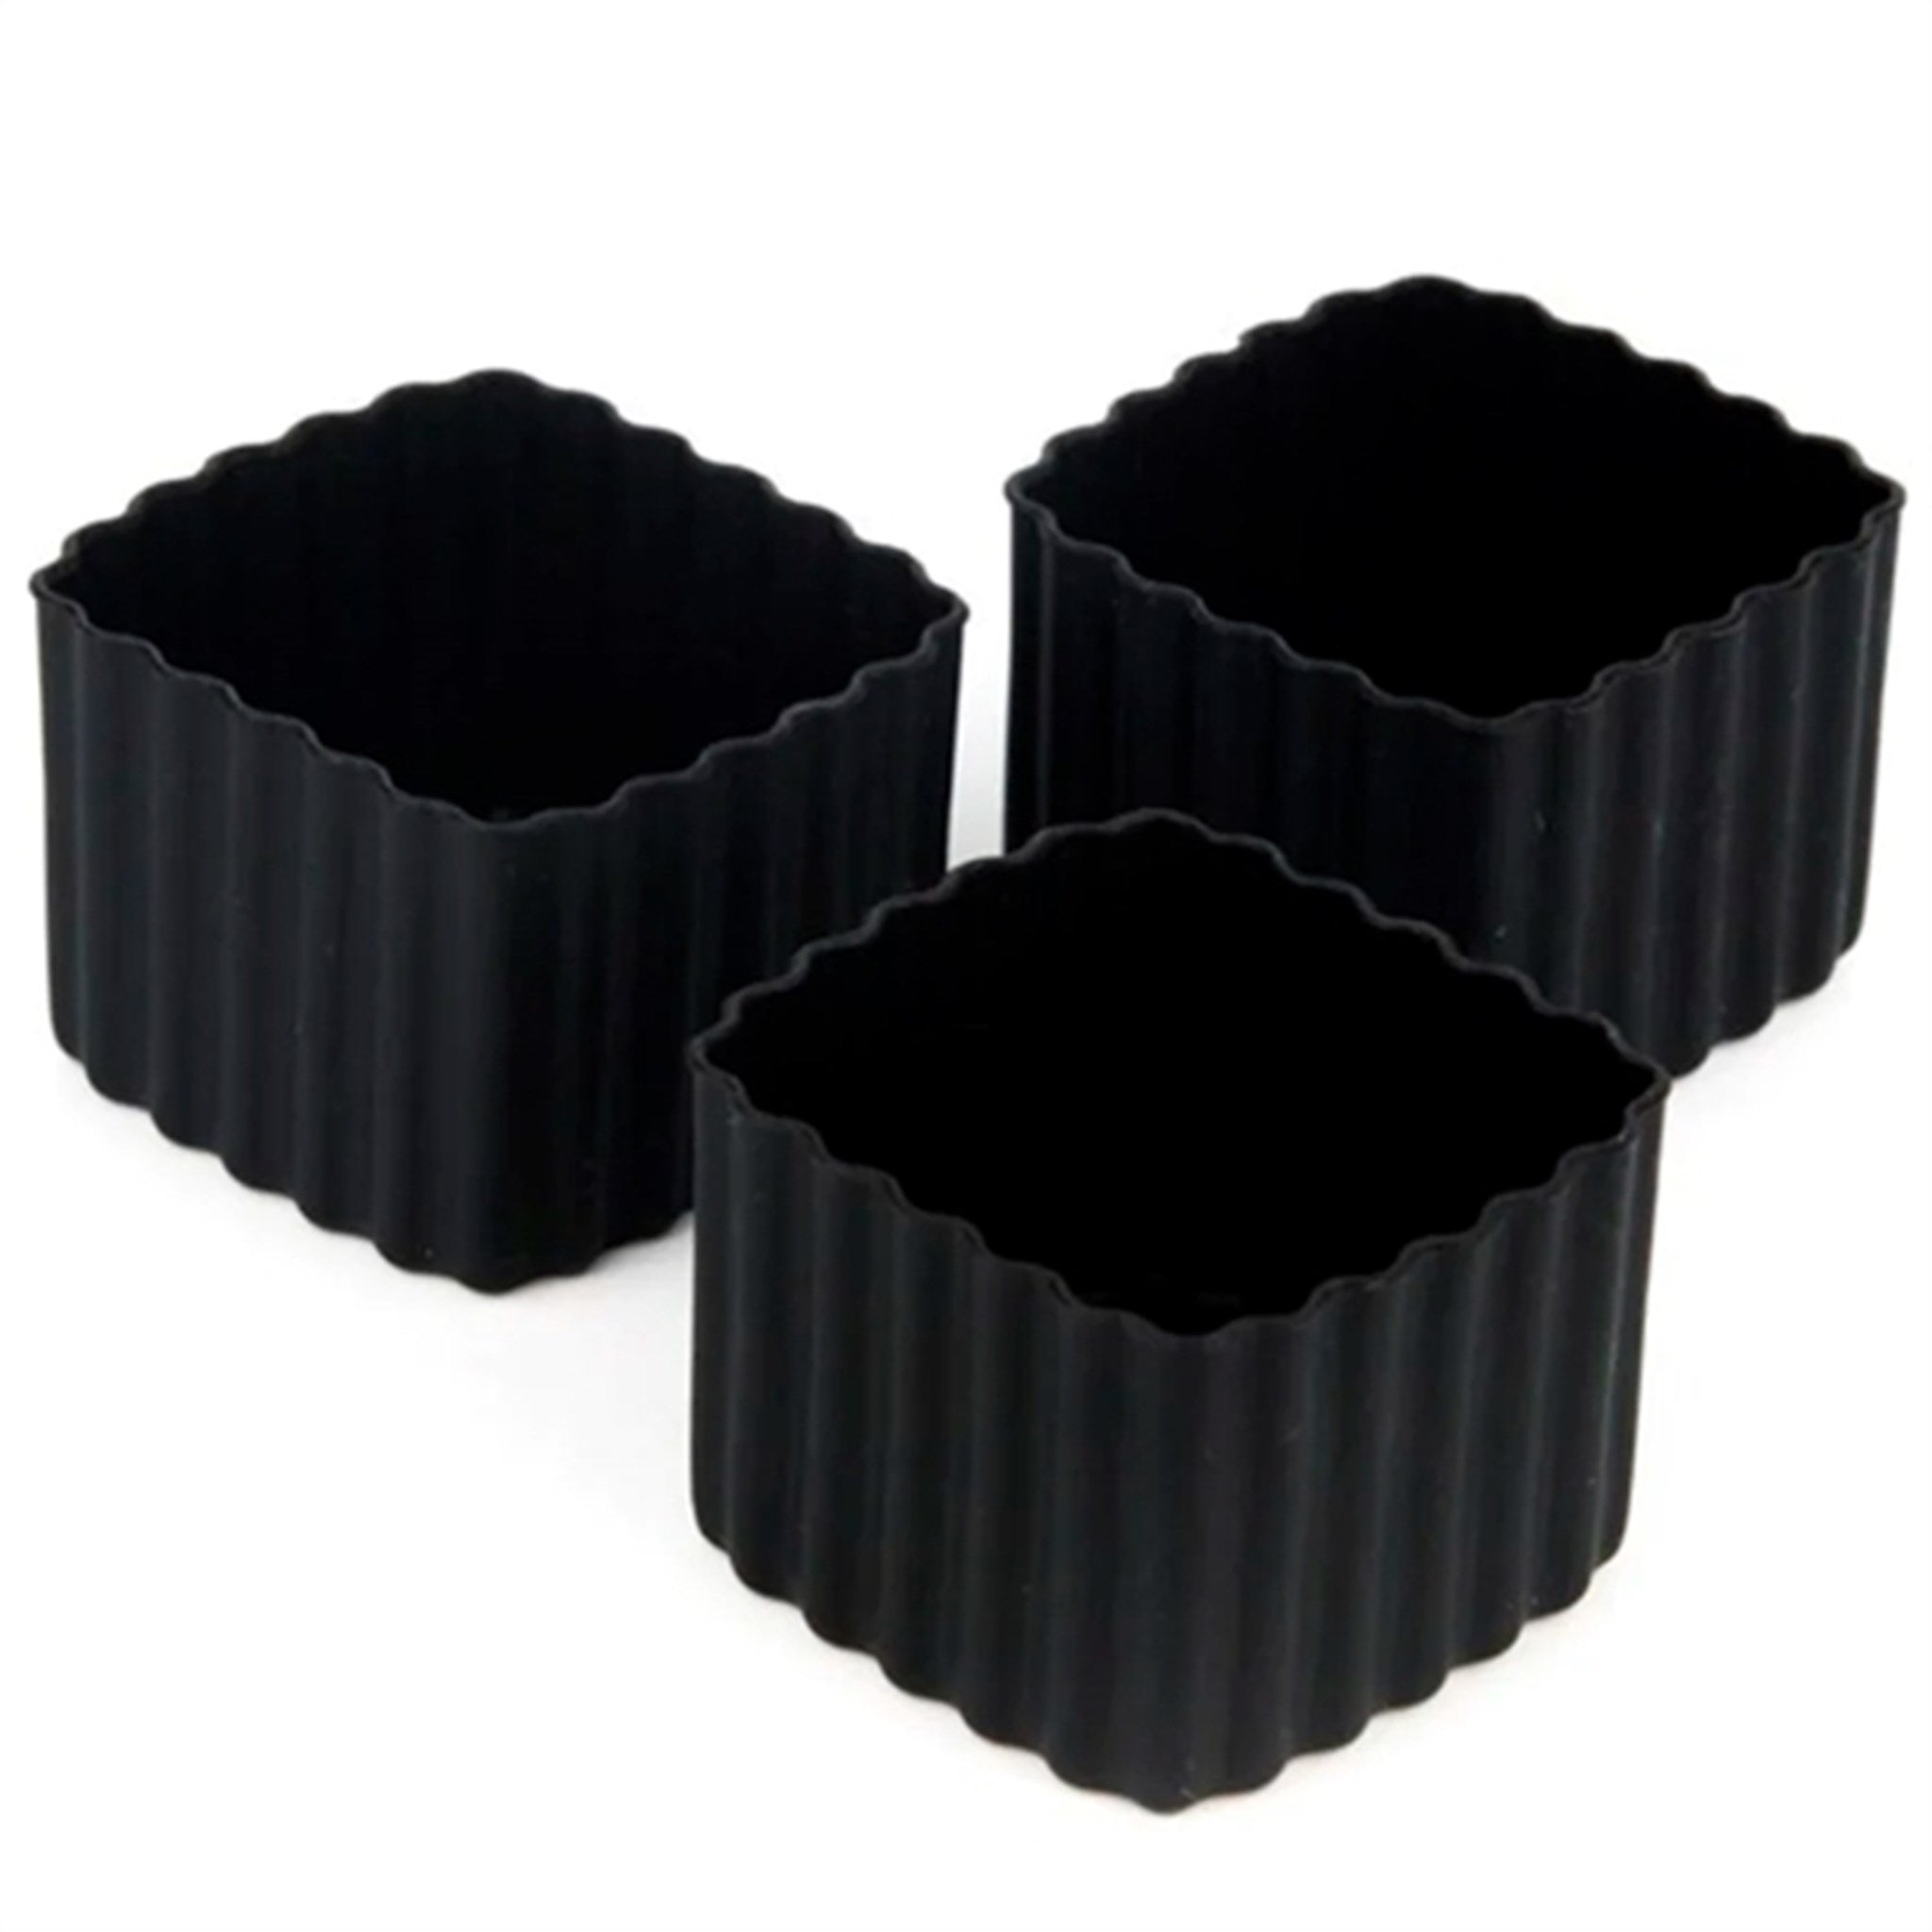 Little Lunch Box Co Bento Silicone Cups Square Black